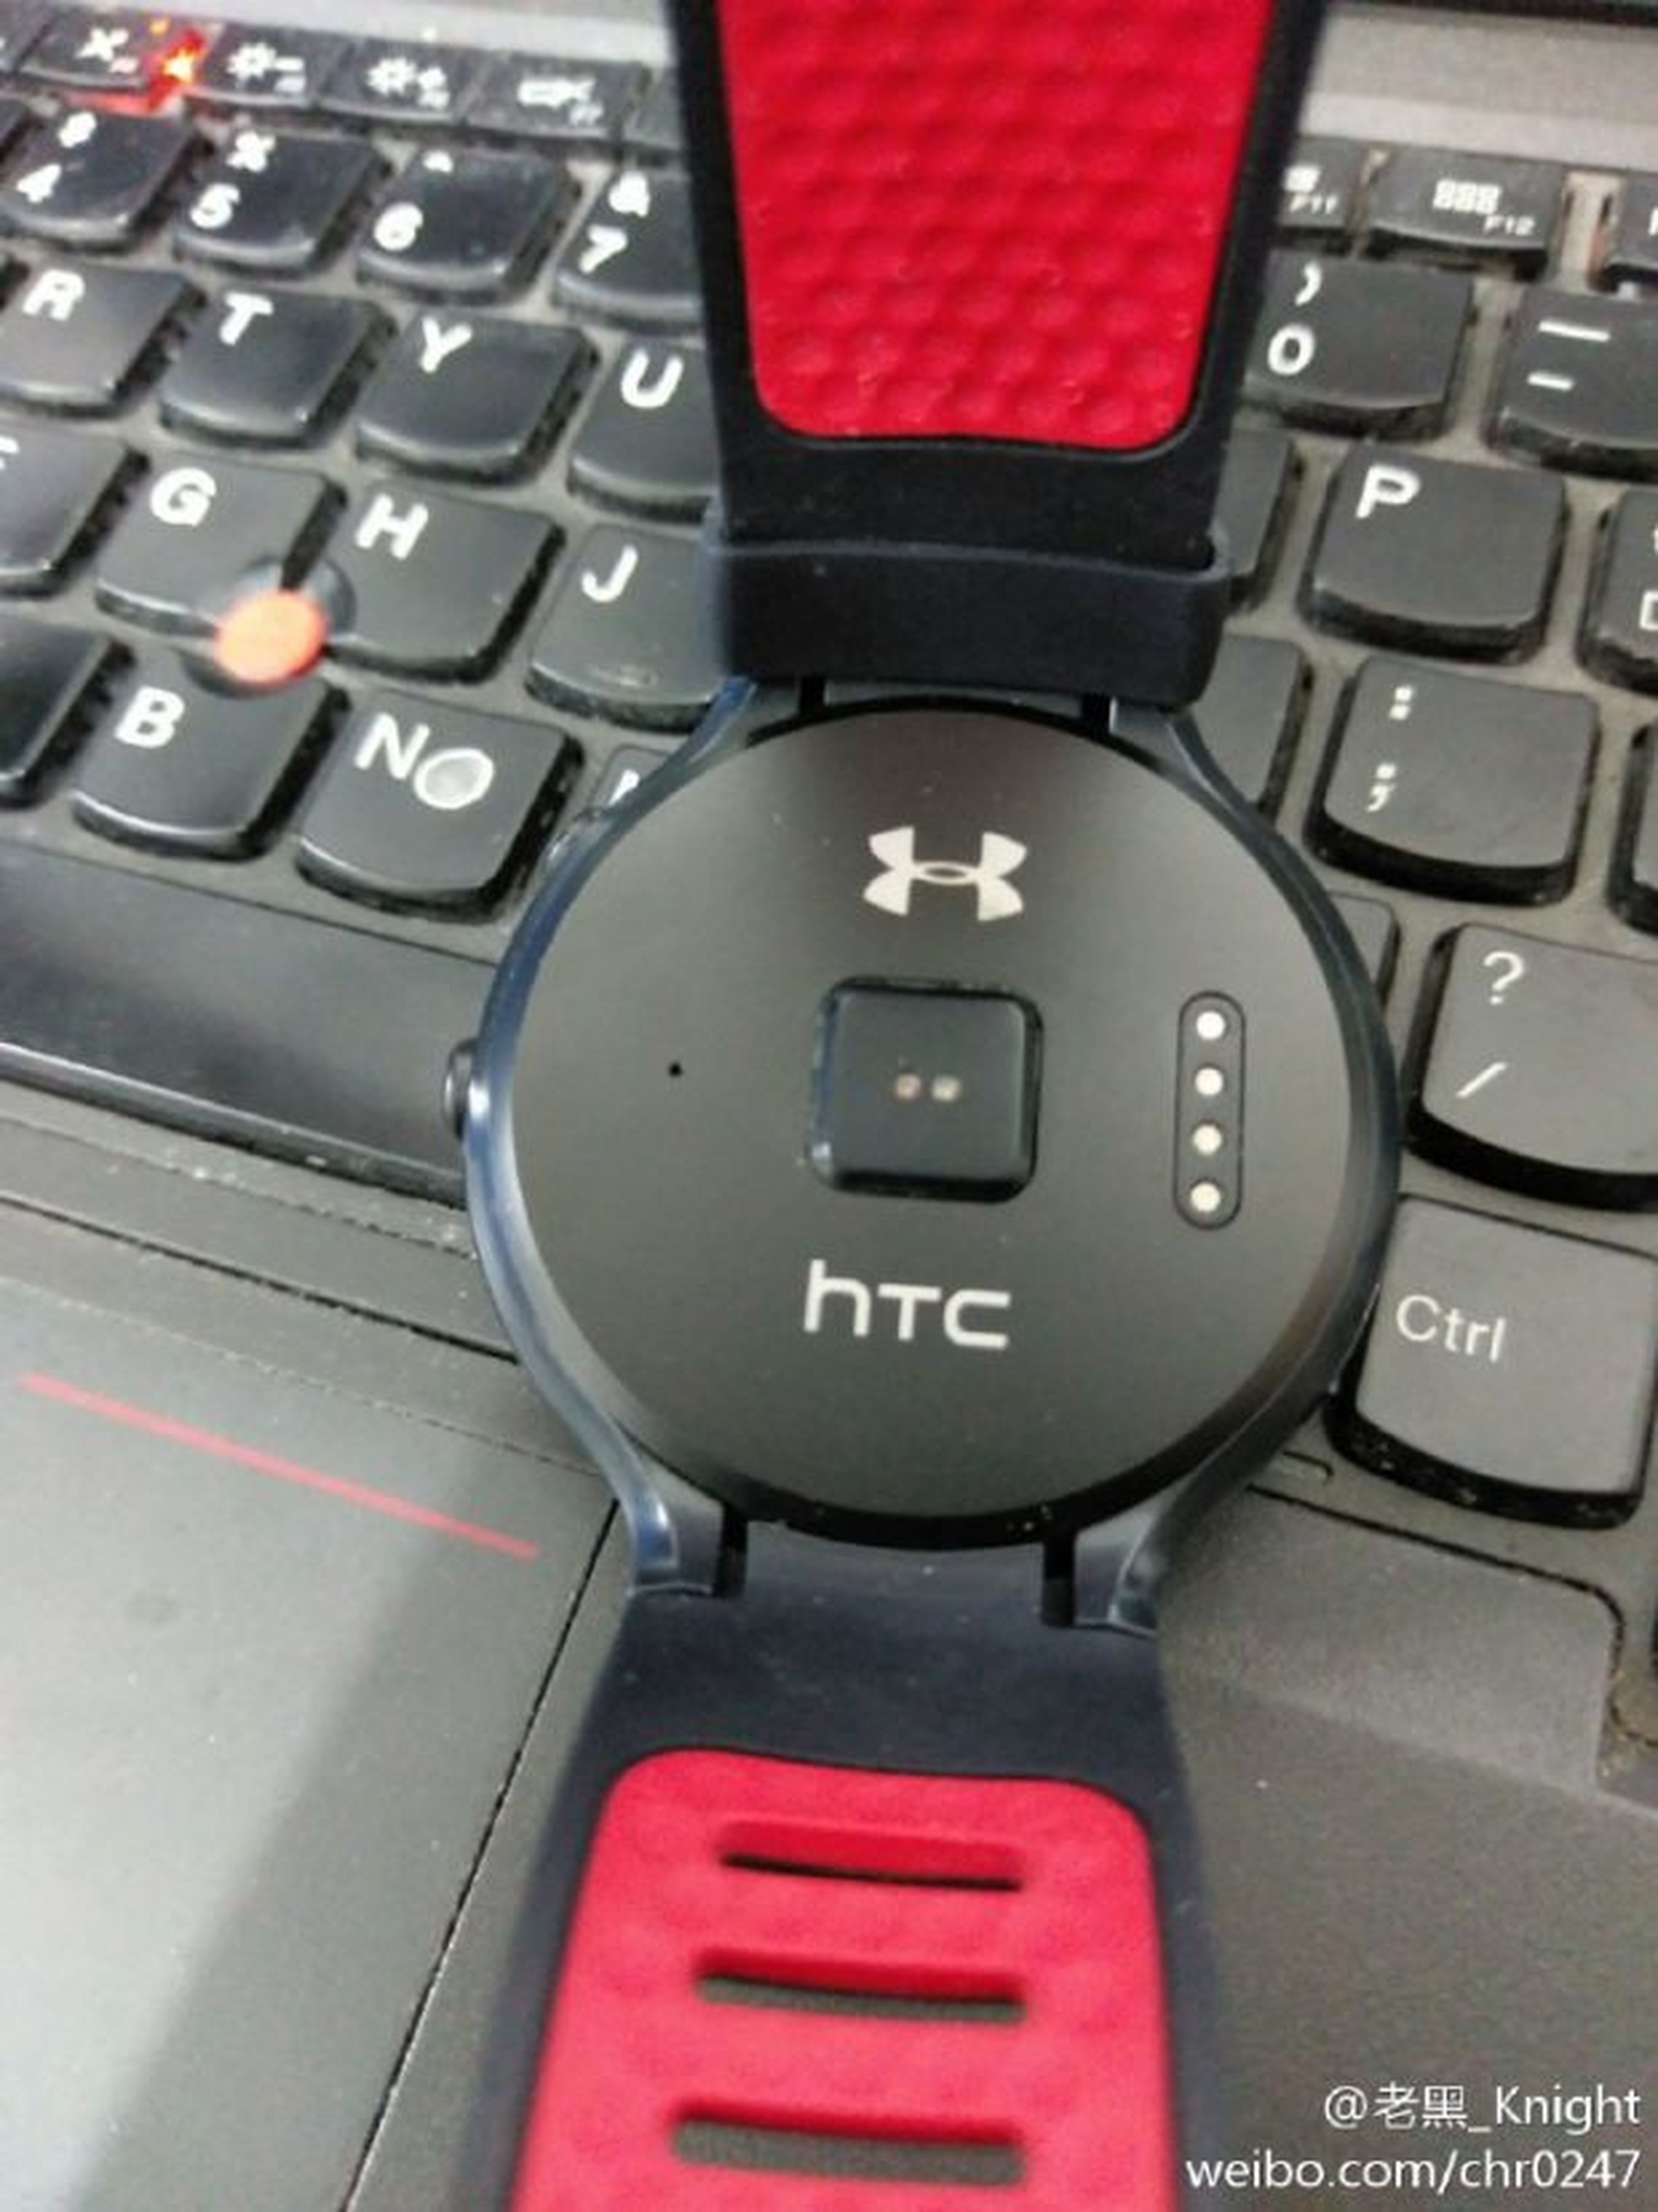 smartwatch de htc